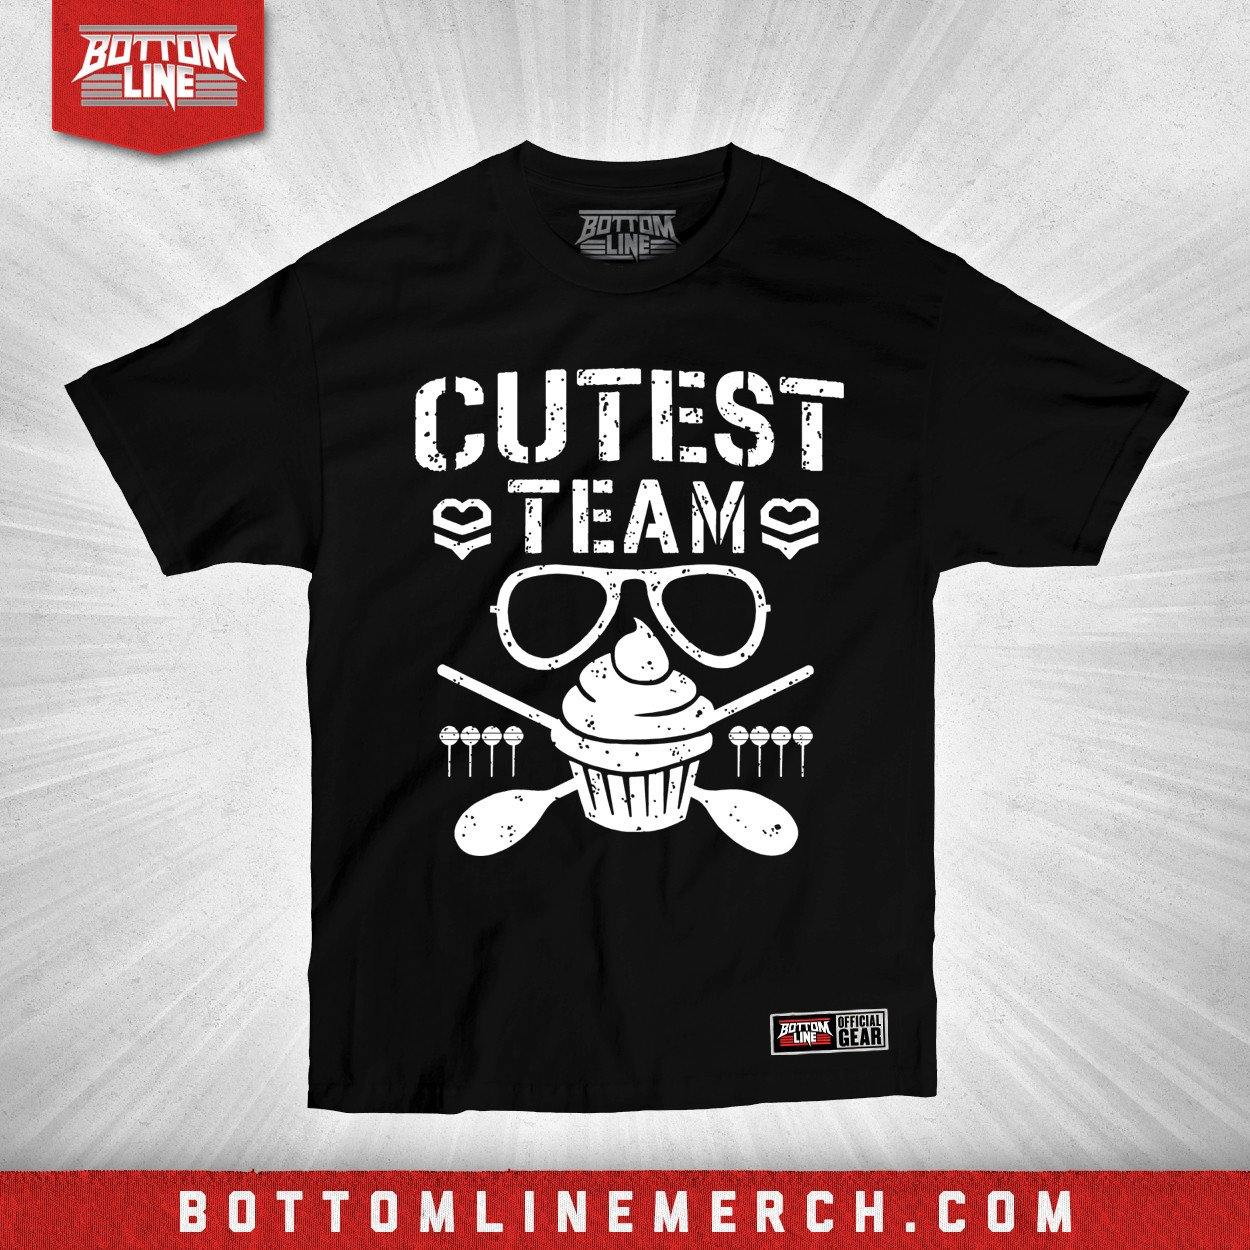 Buy Now – Joey Ryan "World's Cutest Tag Team" Shirt – Wrestler & Wrestling Merch – Bottom Line